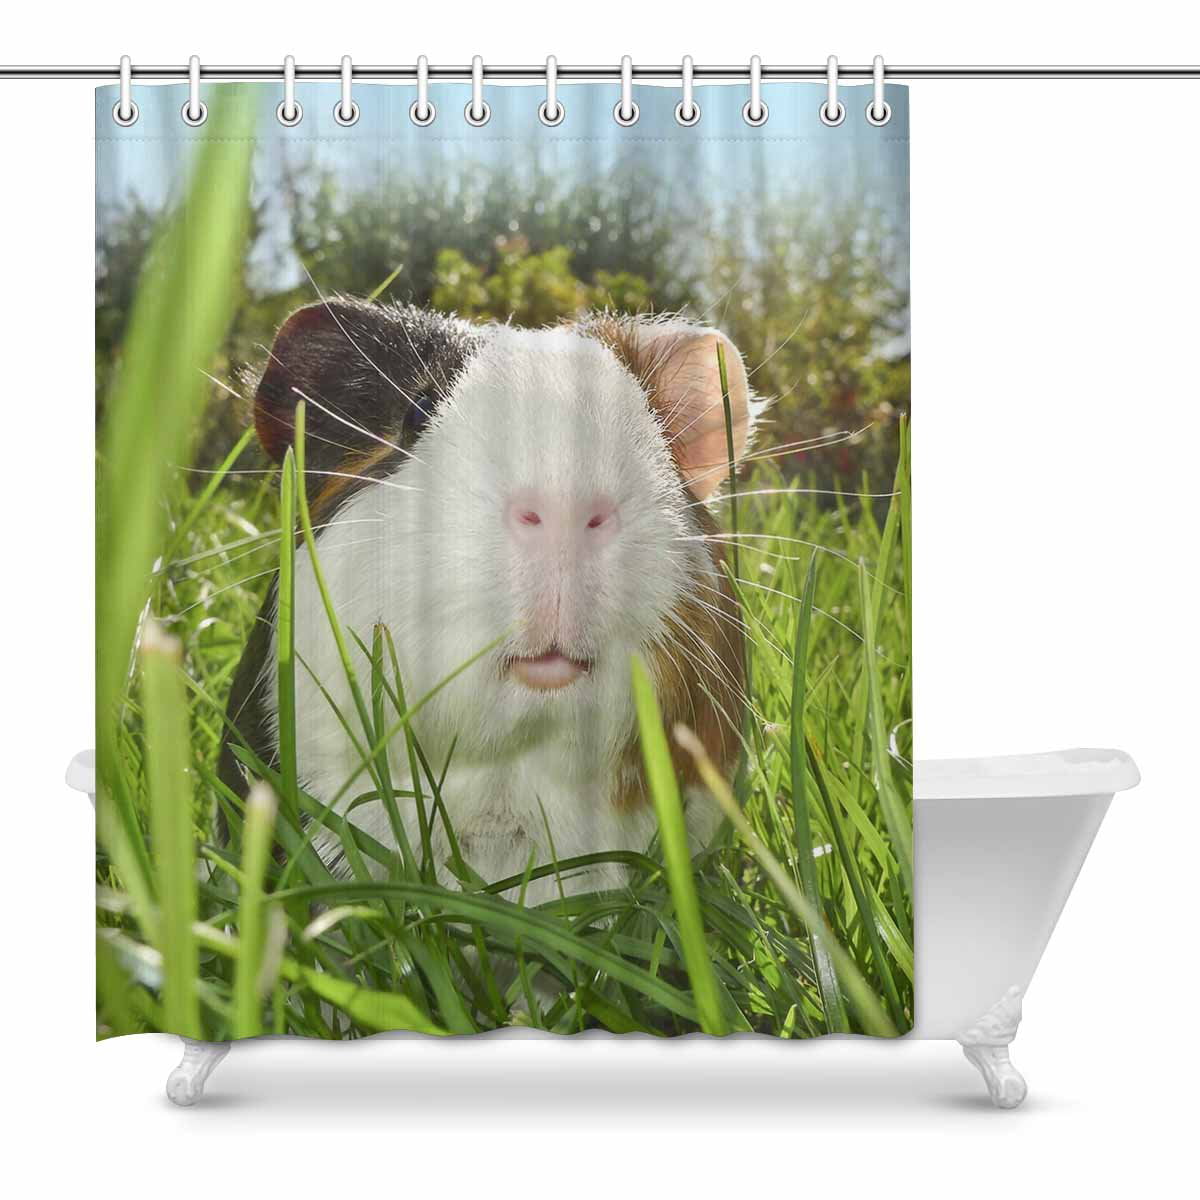 Dutch Rats Decor Guinea Pig Bathroom Shower Curtain Set Fabric &12 Hooks 71 Inch 